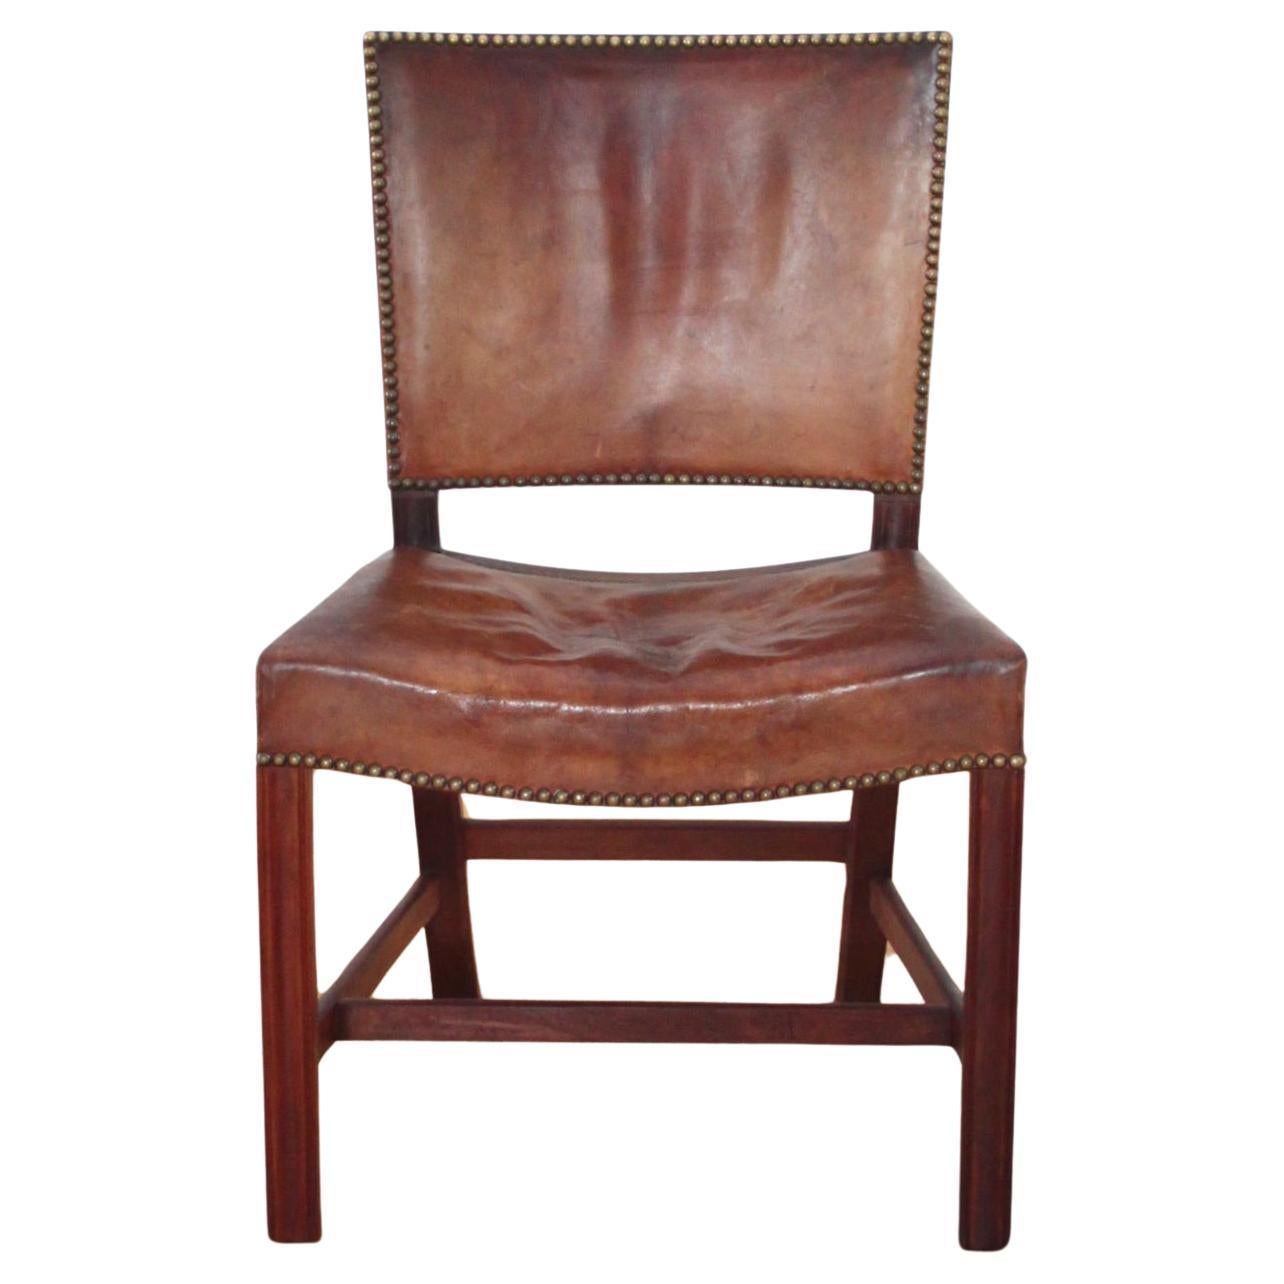 Kaare Klint Red Chair, Rud Rasmussen, Original Niger Leather and Mahogany frame